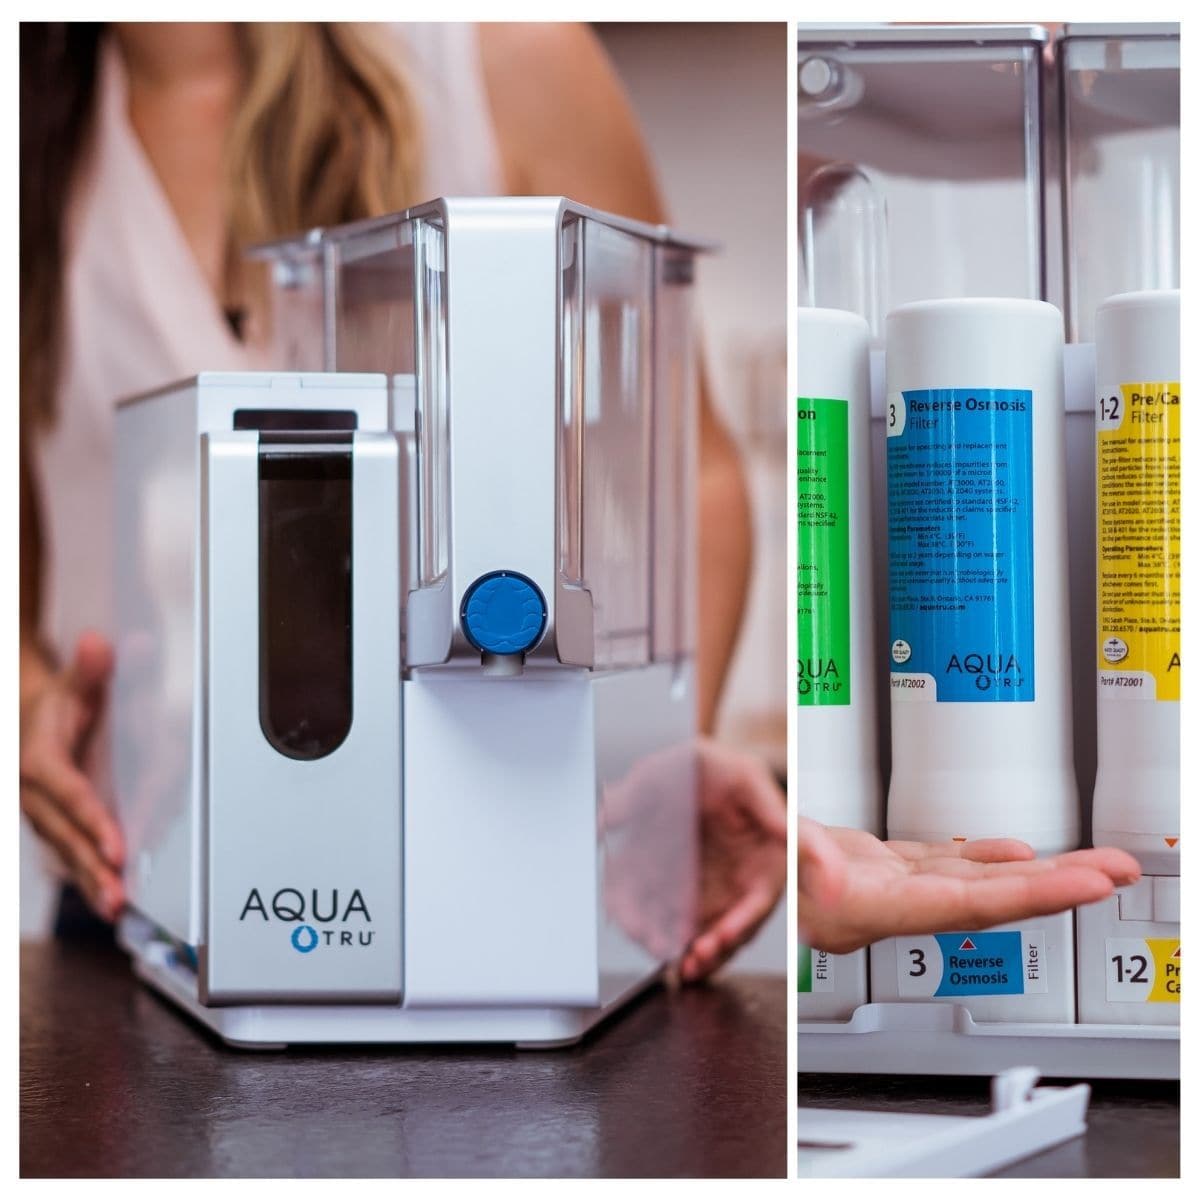 Aqua Tru Countertop Reverse Osmosis Water Purifier Review - Easy to Use! 